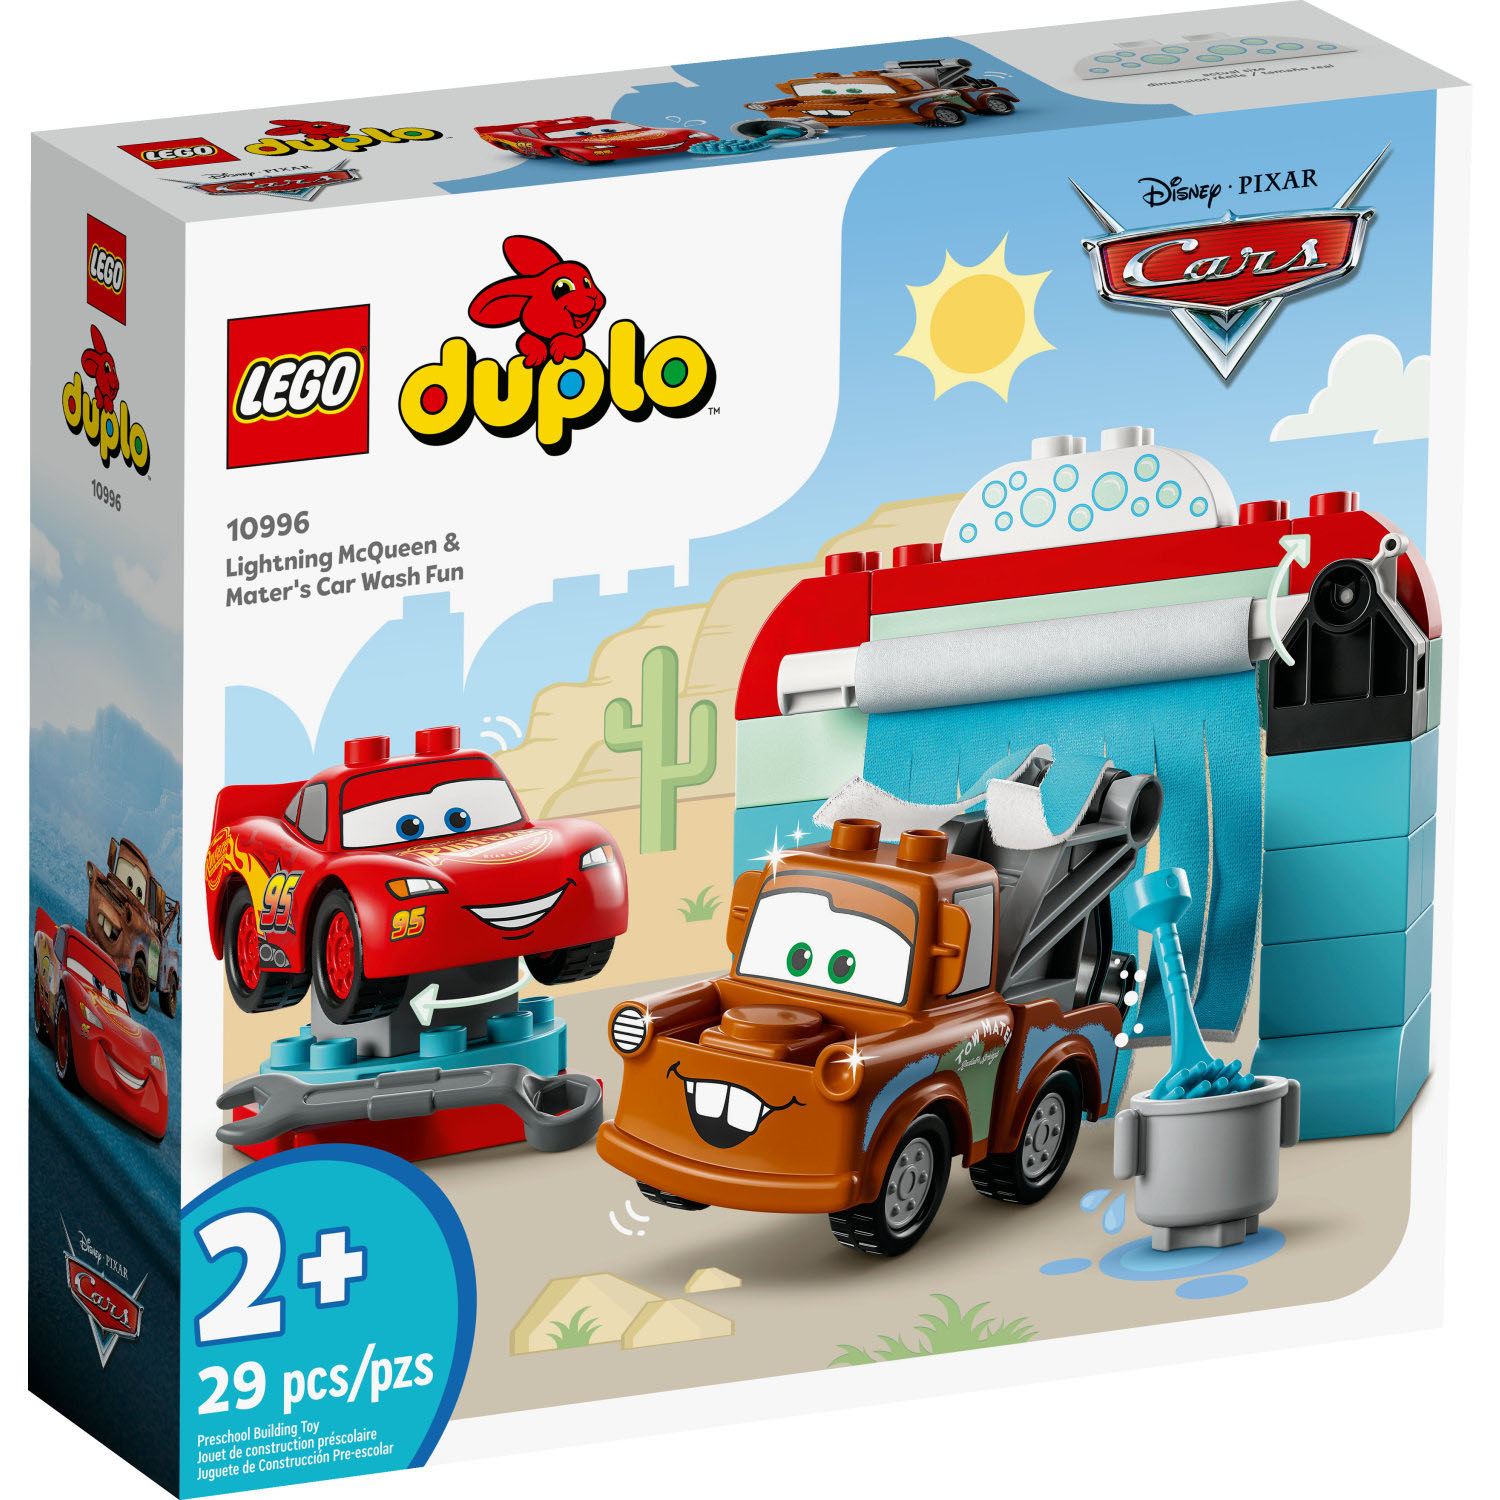 Left View: LEGO - DUPLO  Disney and Pixar’s Cars Lightning McQueen & Mater’s Car Wash Fun 10996